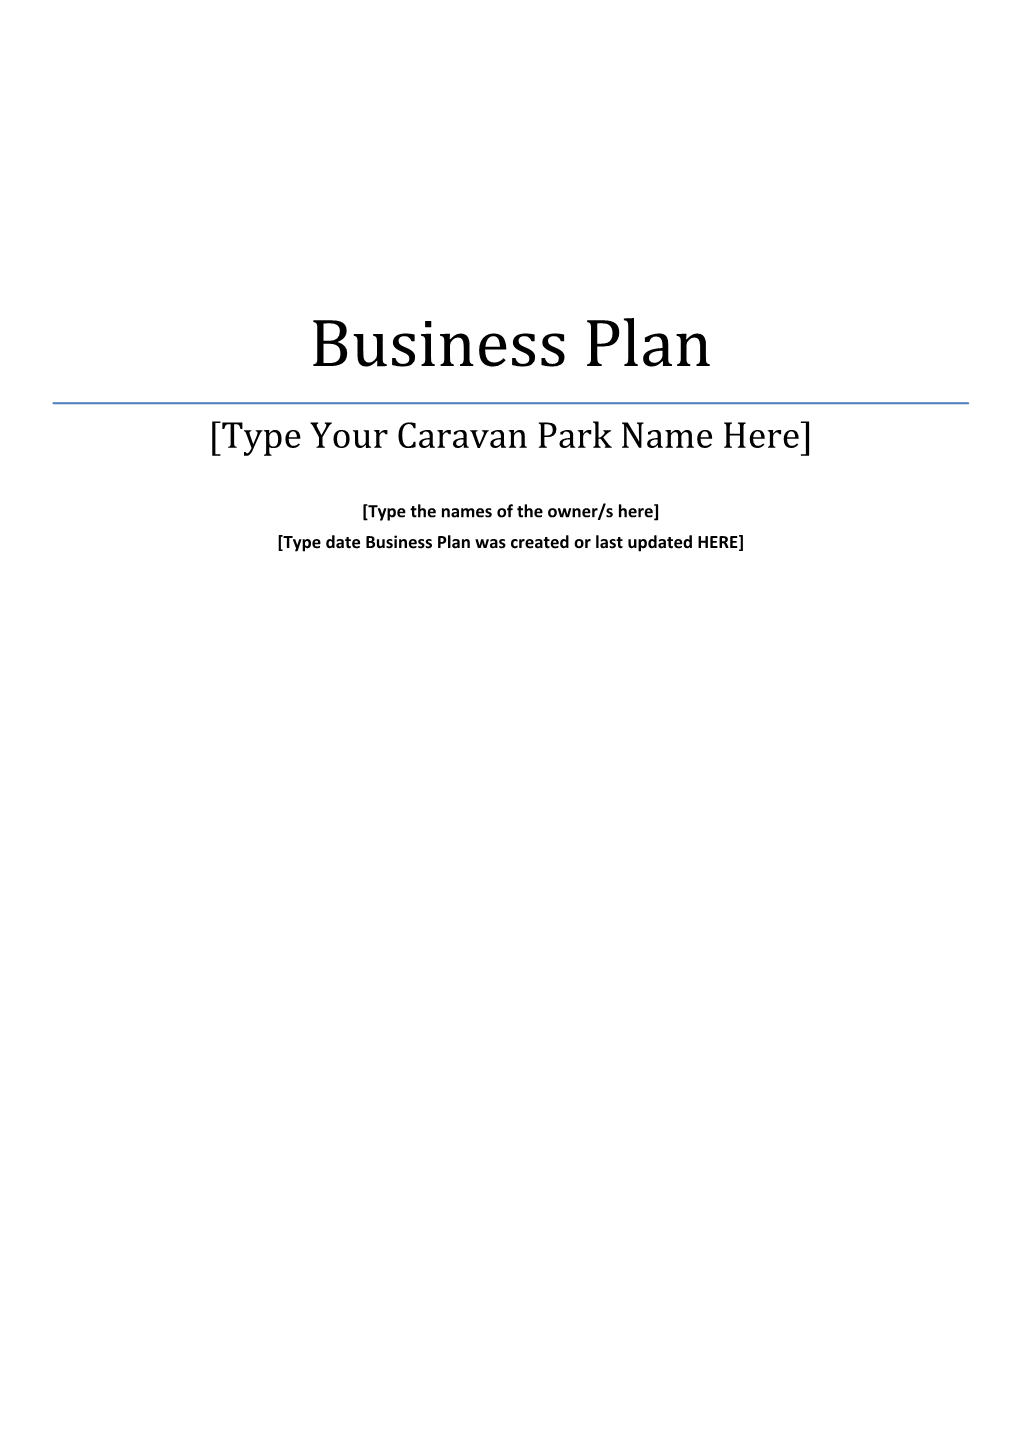 CRVA Business Plan Template Version BPT01